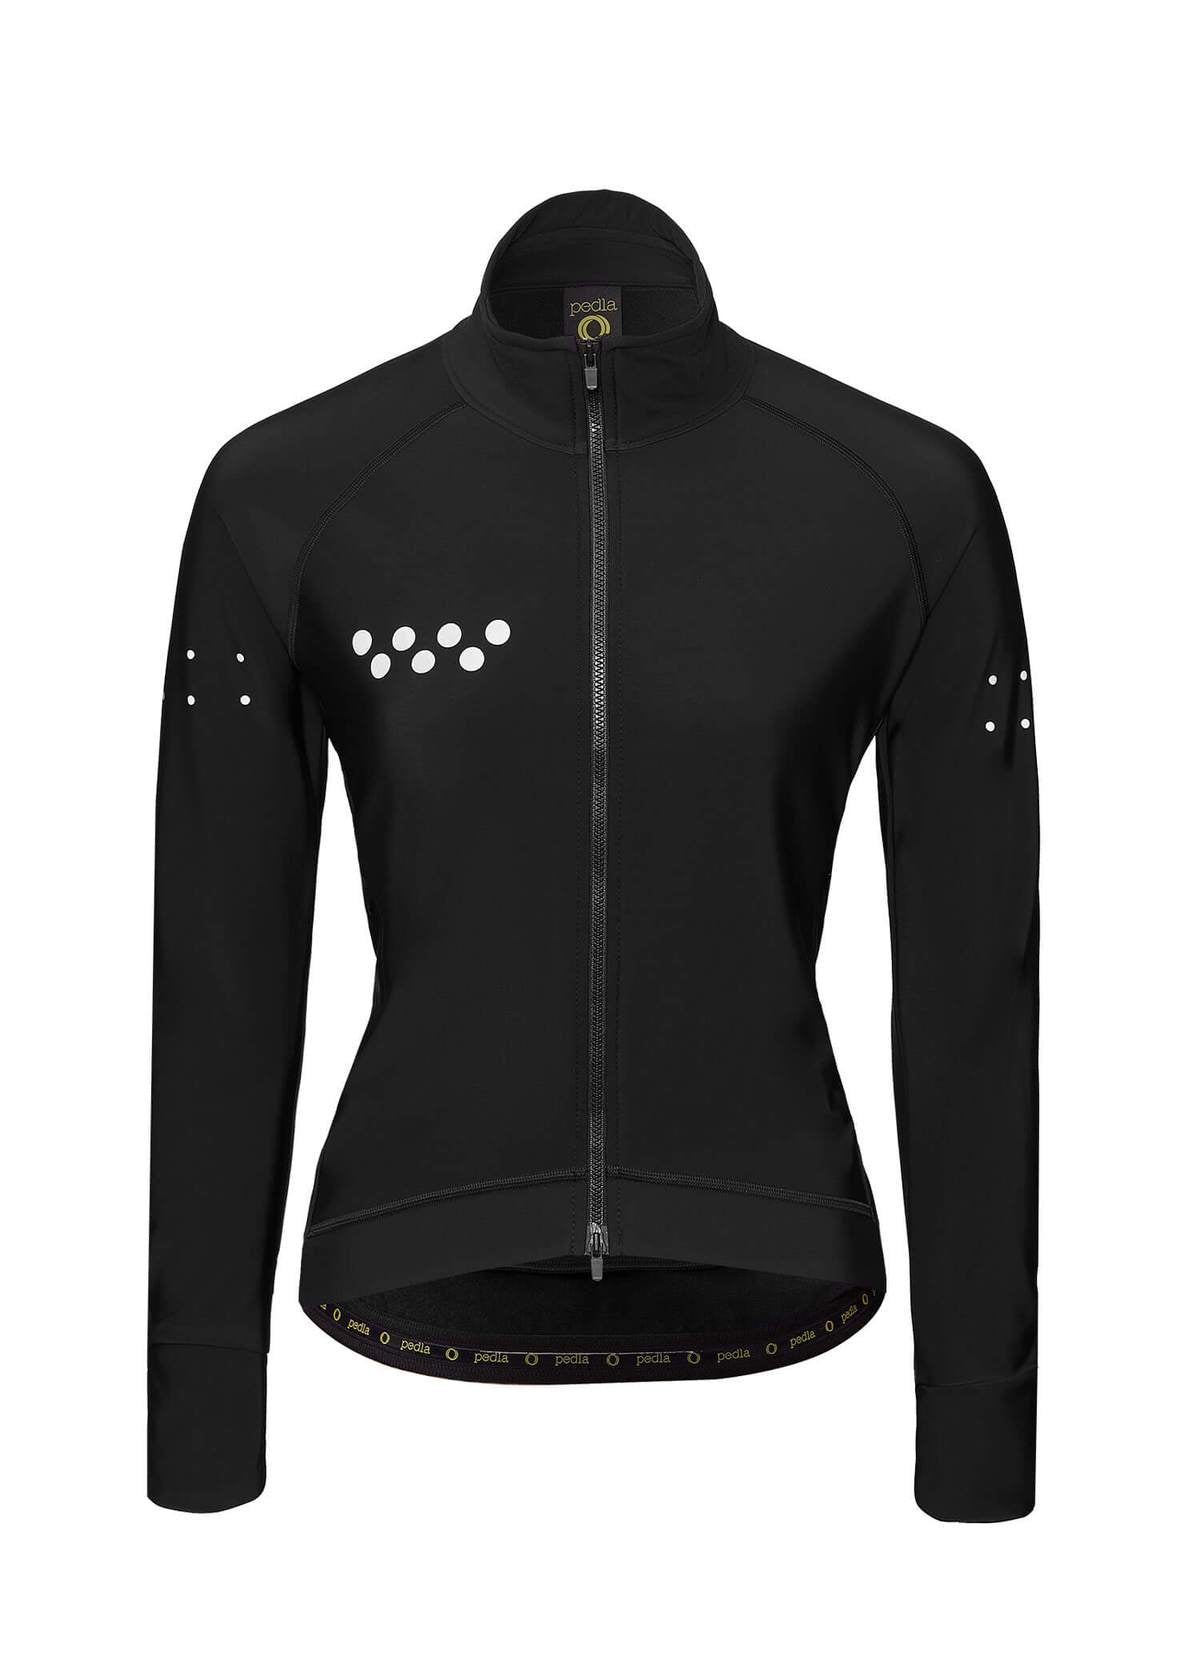 Pedla Women's CORE Roubaix Jacket, 2021 - Cycle Closet